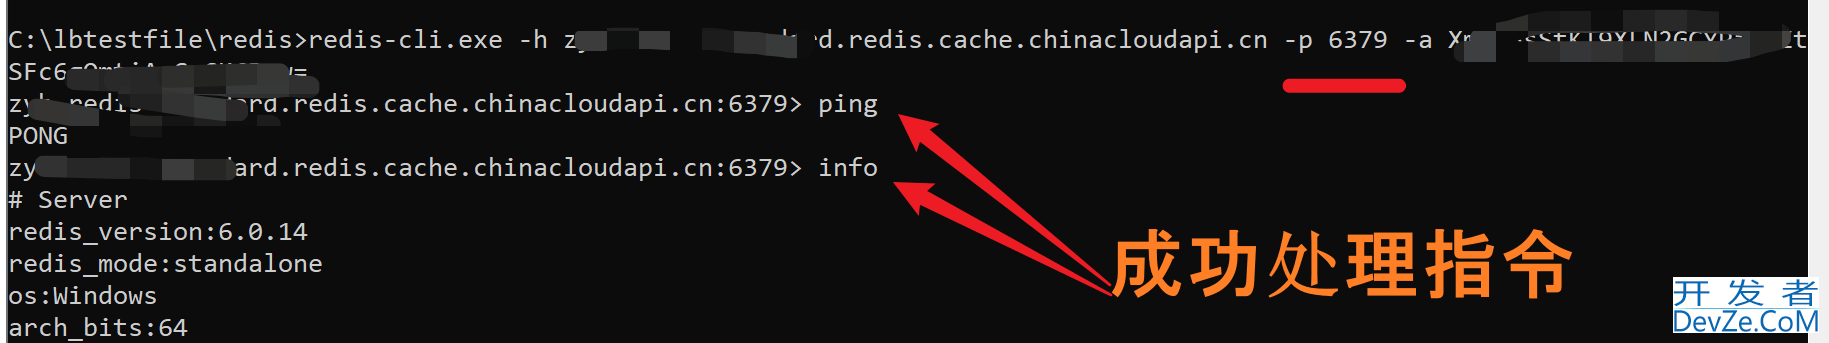 redis-copy使用6379端口无法连接到Redis服务器的问题